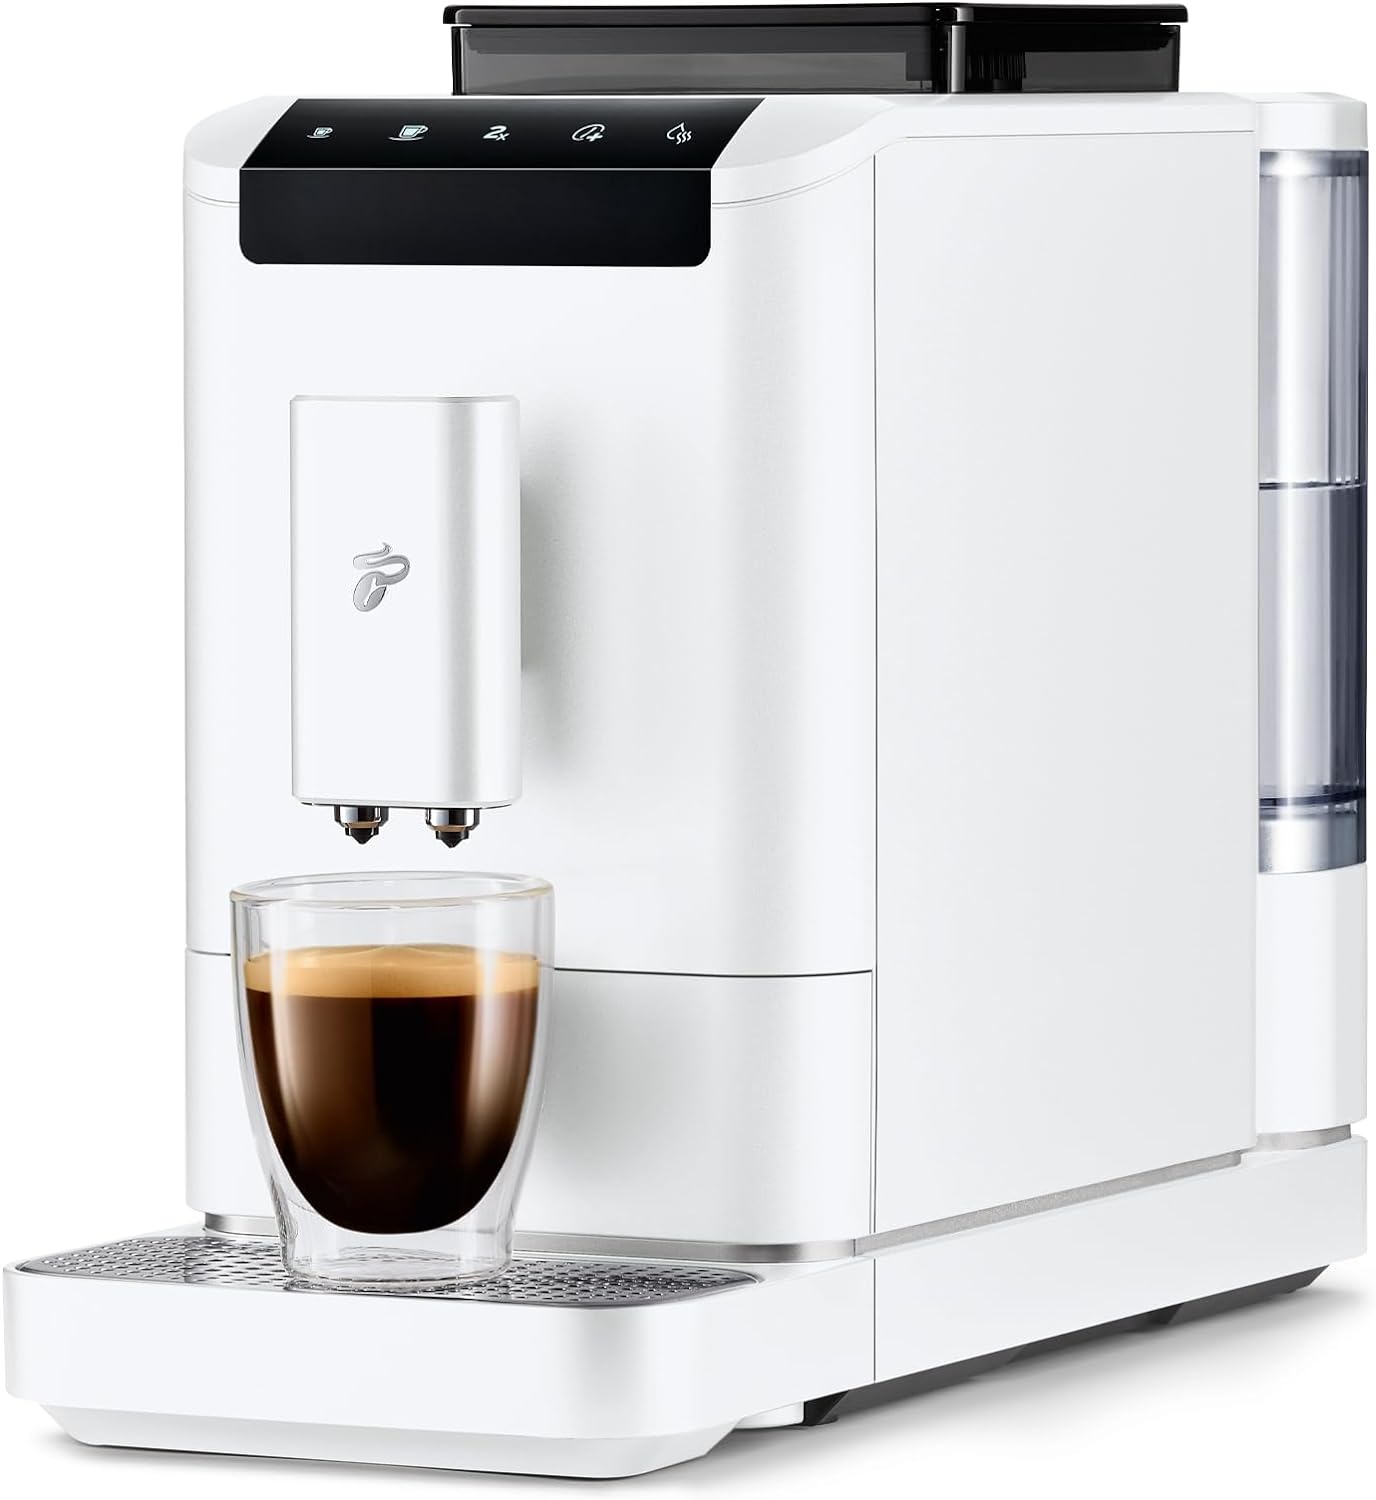 Tchibo Esperto2 Caffè Fully Automatic Coffee Machine With 2 Cup Function for Caffè Crema and Espresso, Scandi White